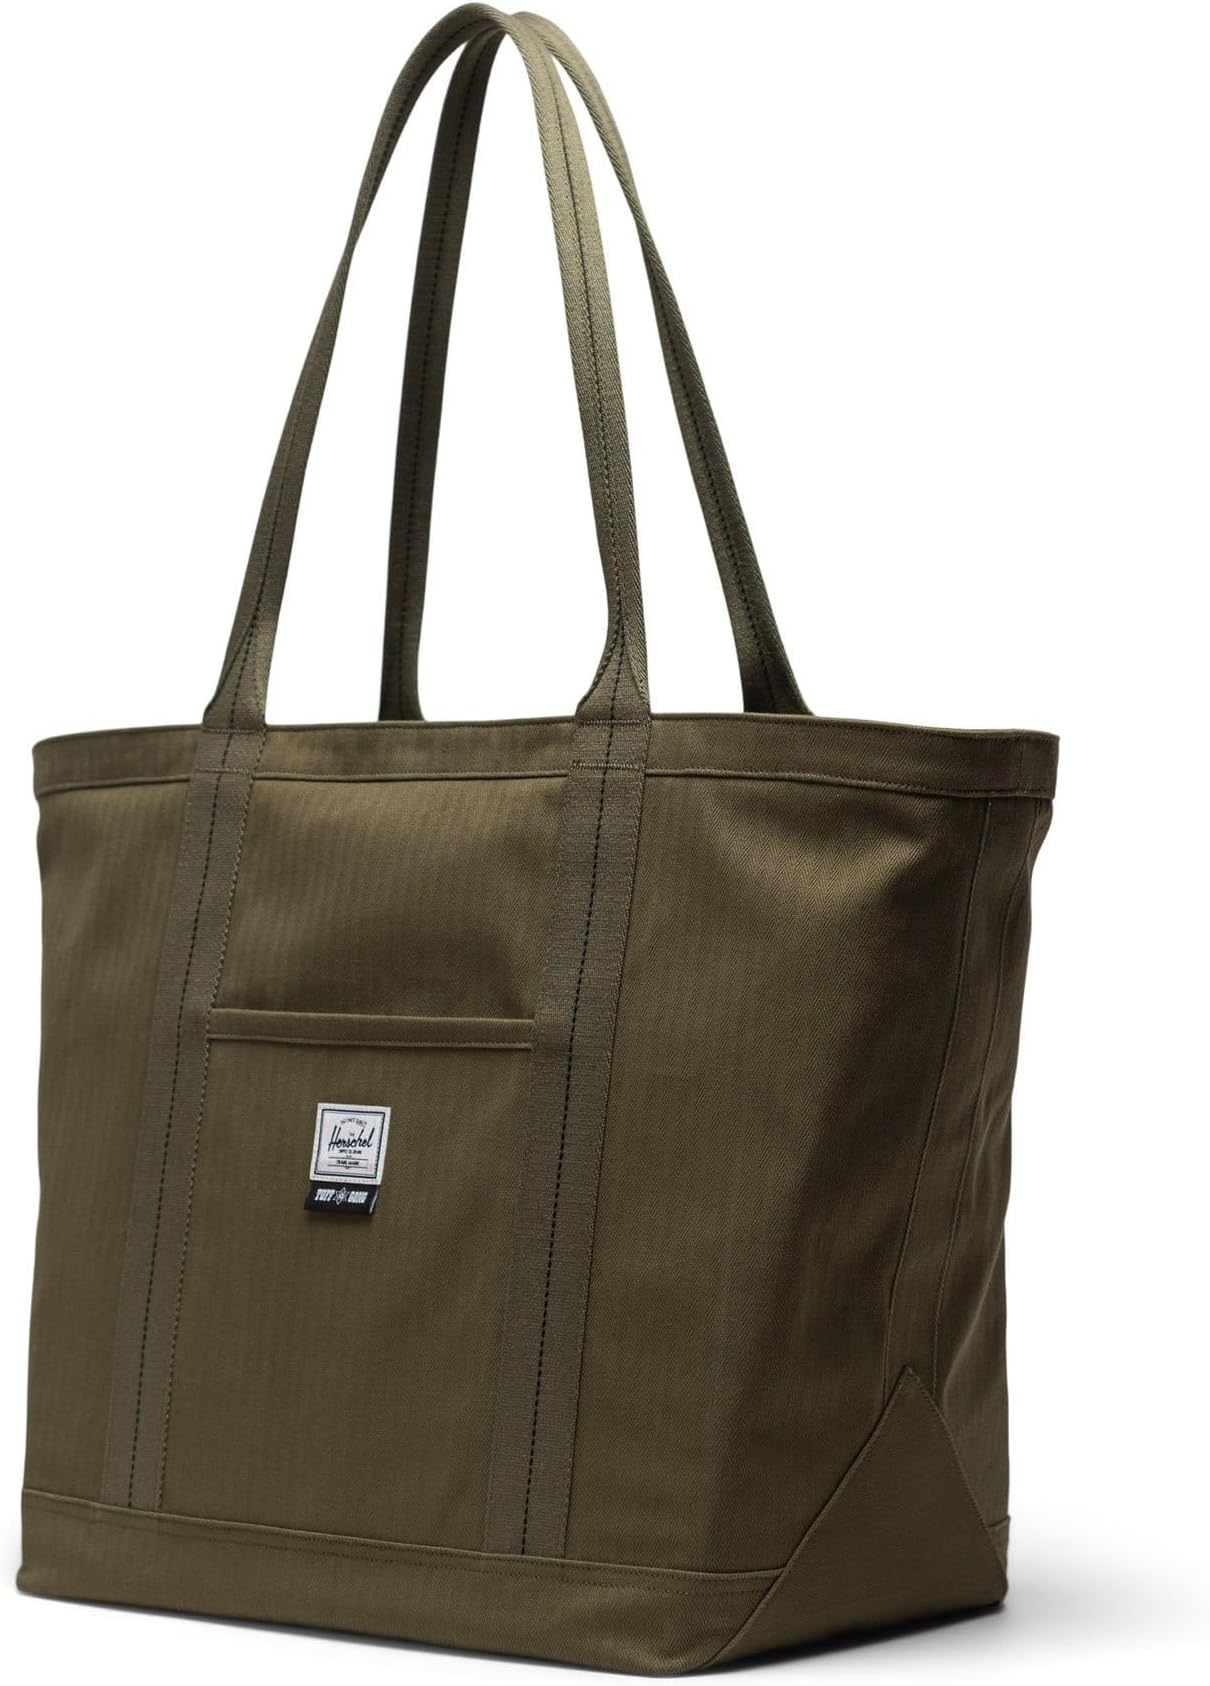 спортивная сумка heritage herschel supply co цвет ivy green chicory coffee Бэмфилд Мид Herschel Supply Co., цвет Ivy Green